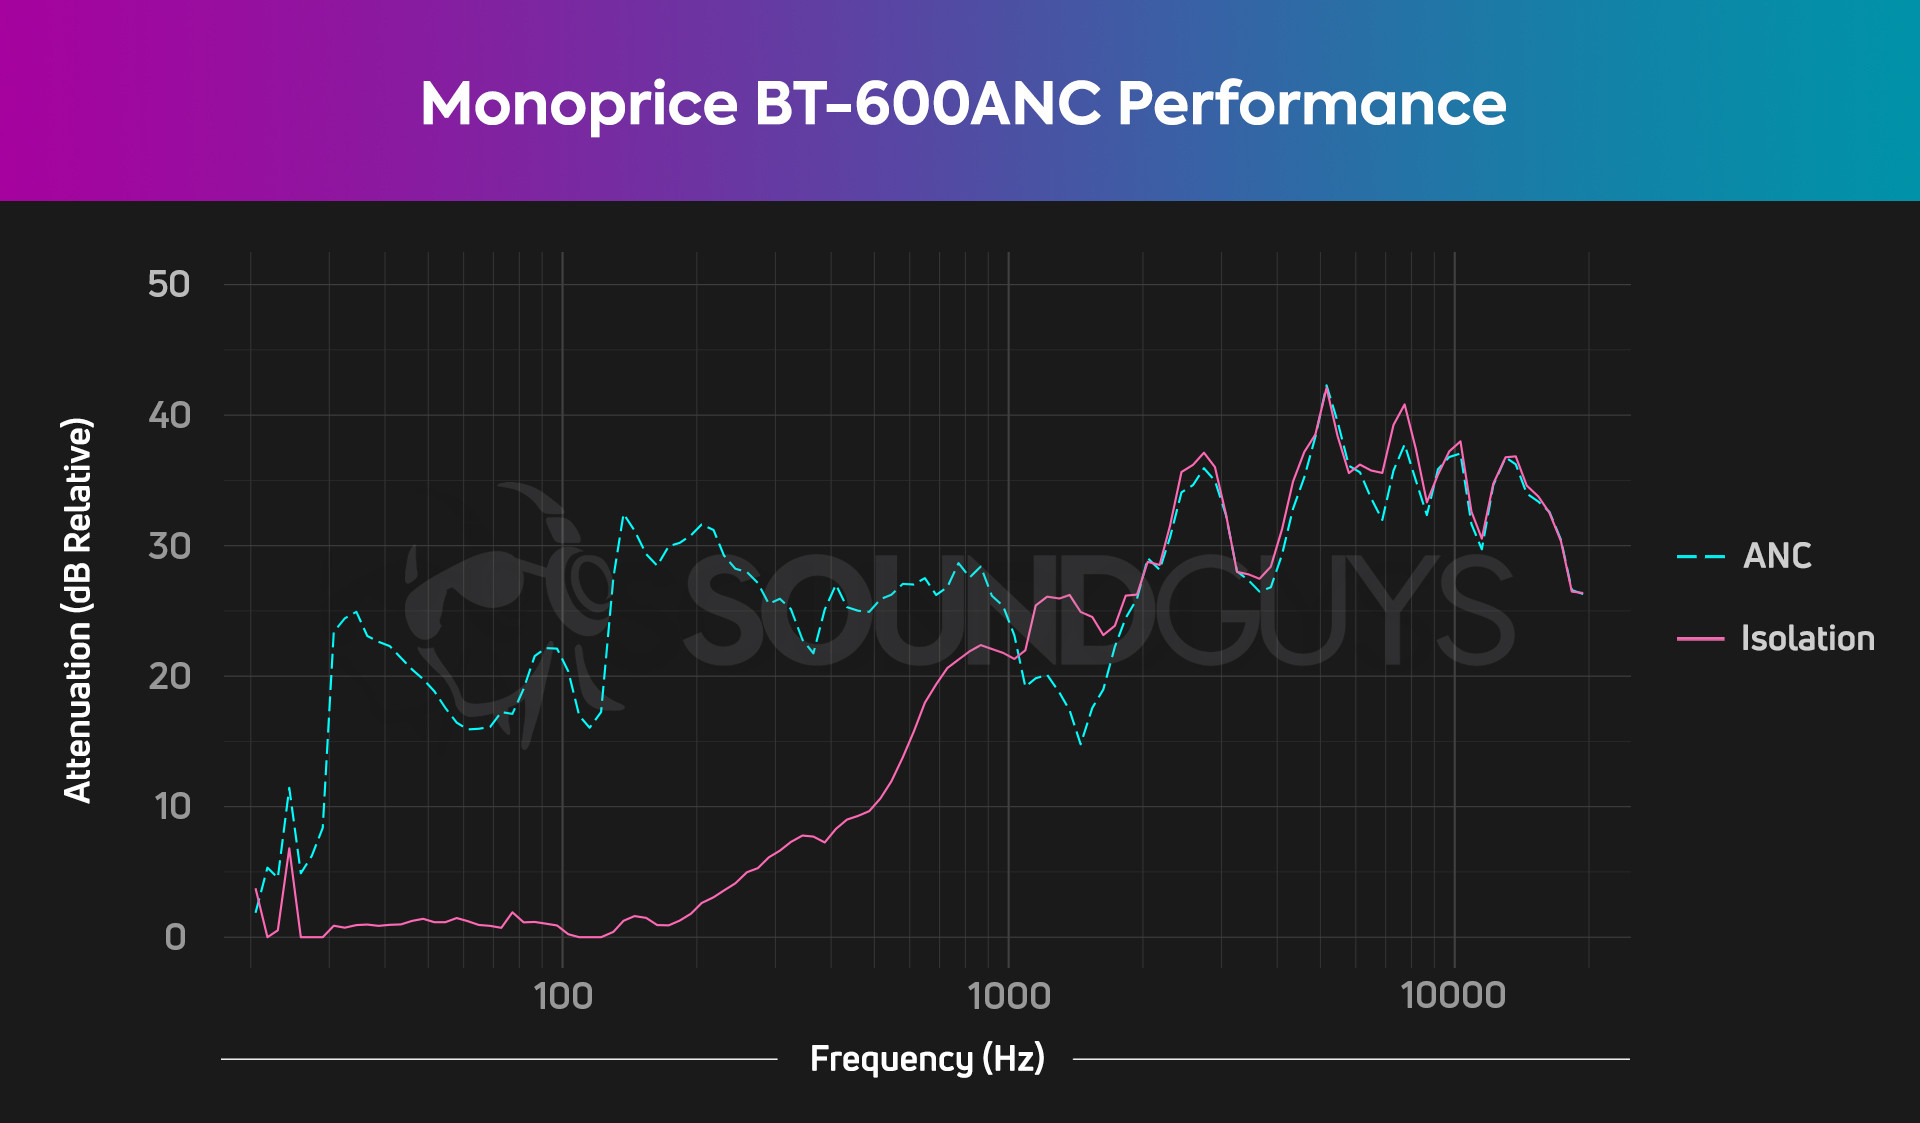 Monoprice BT-600ANC Isolation Performance